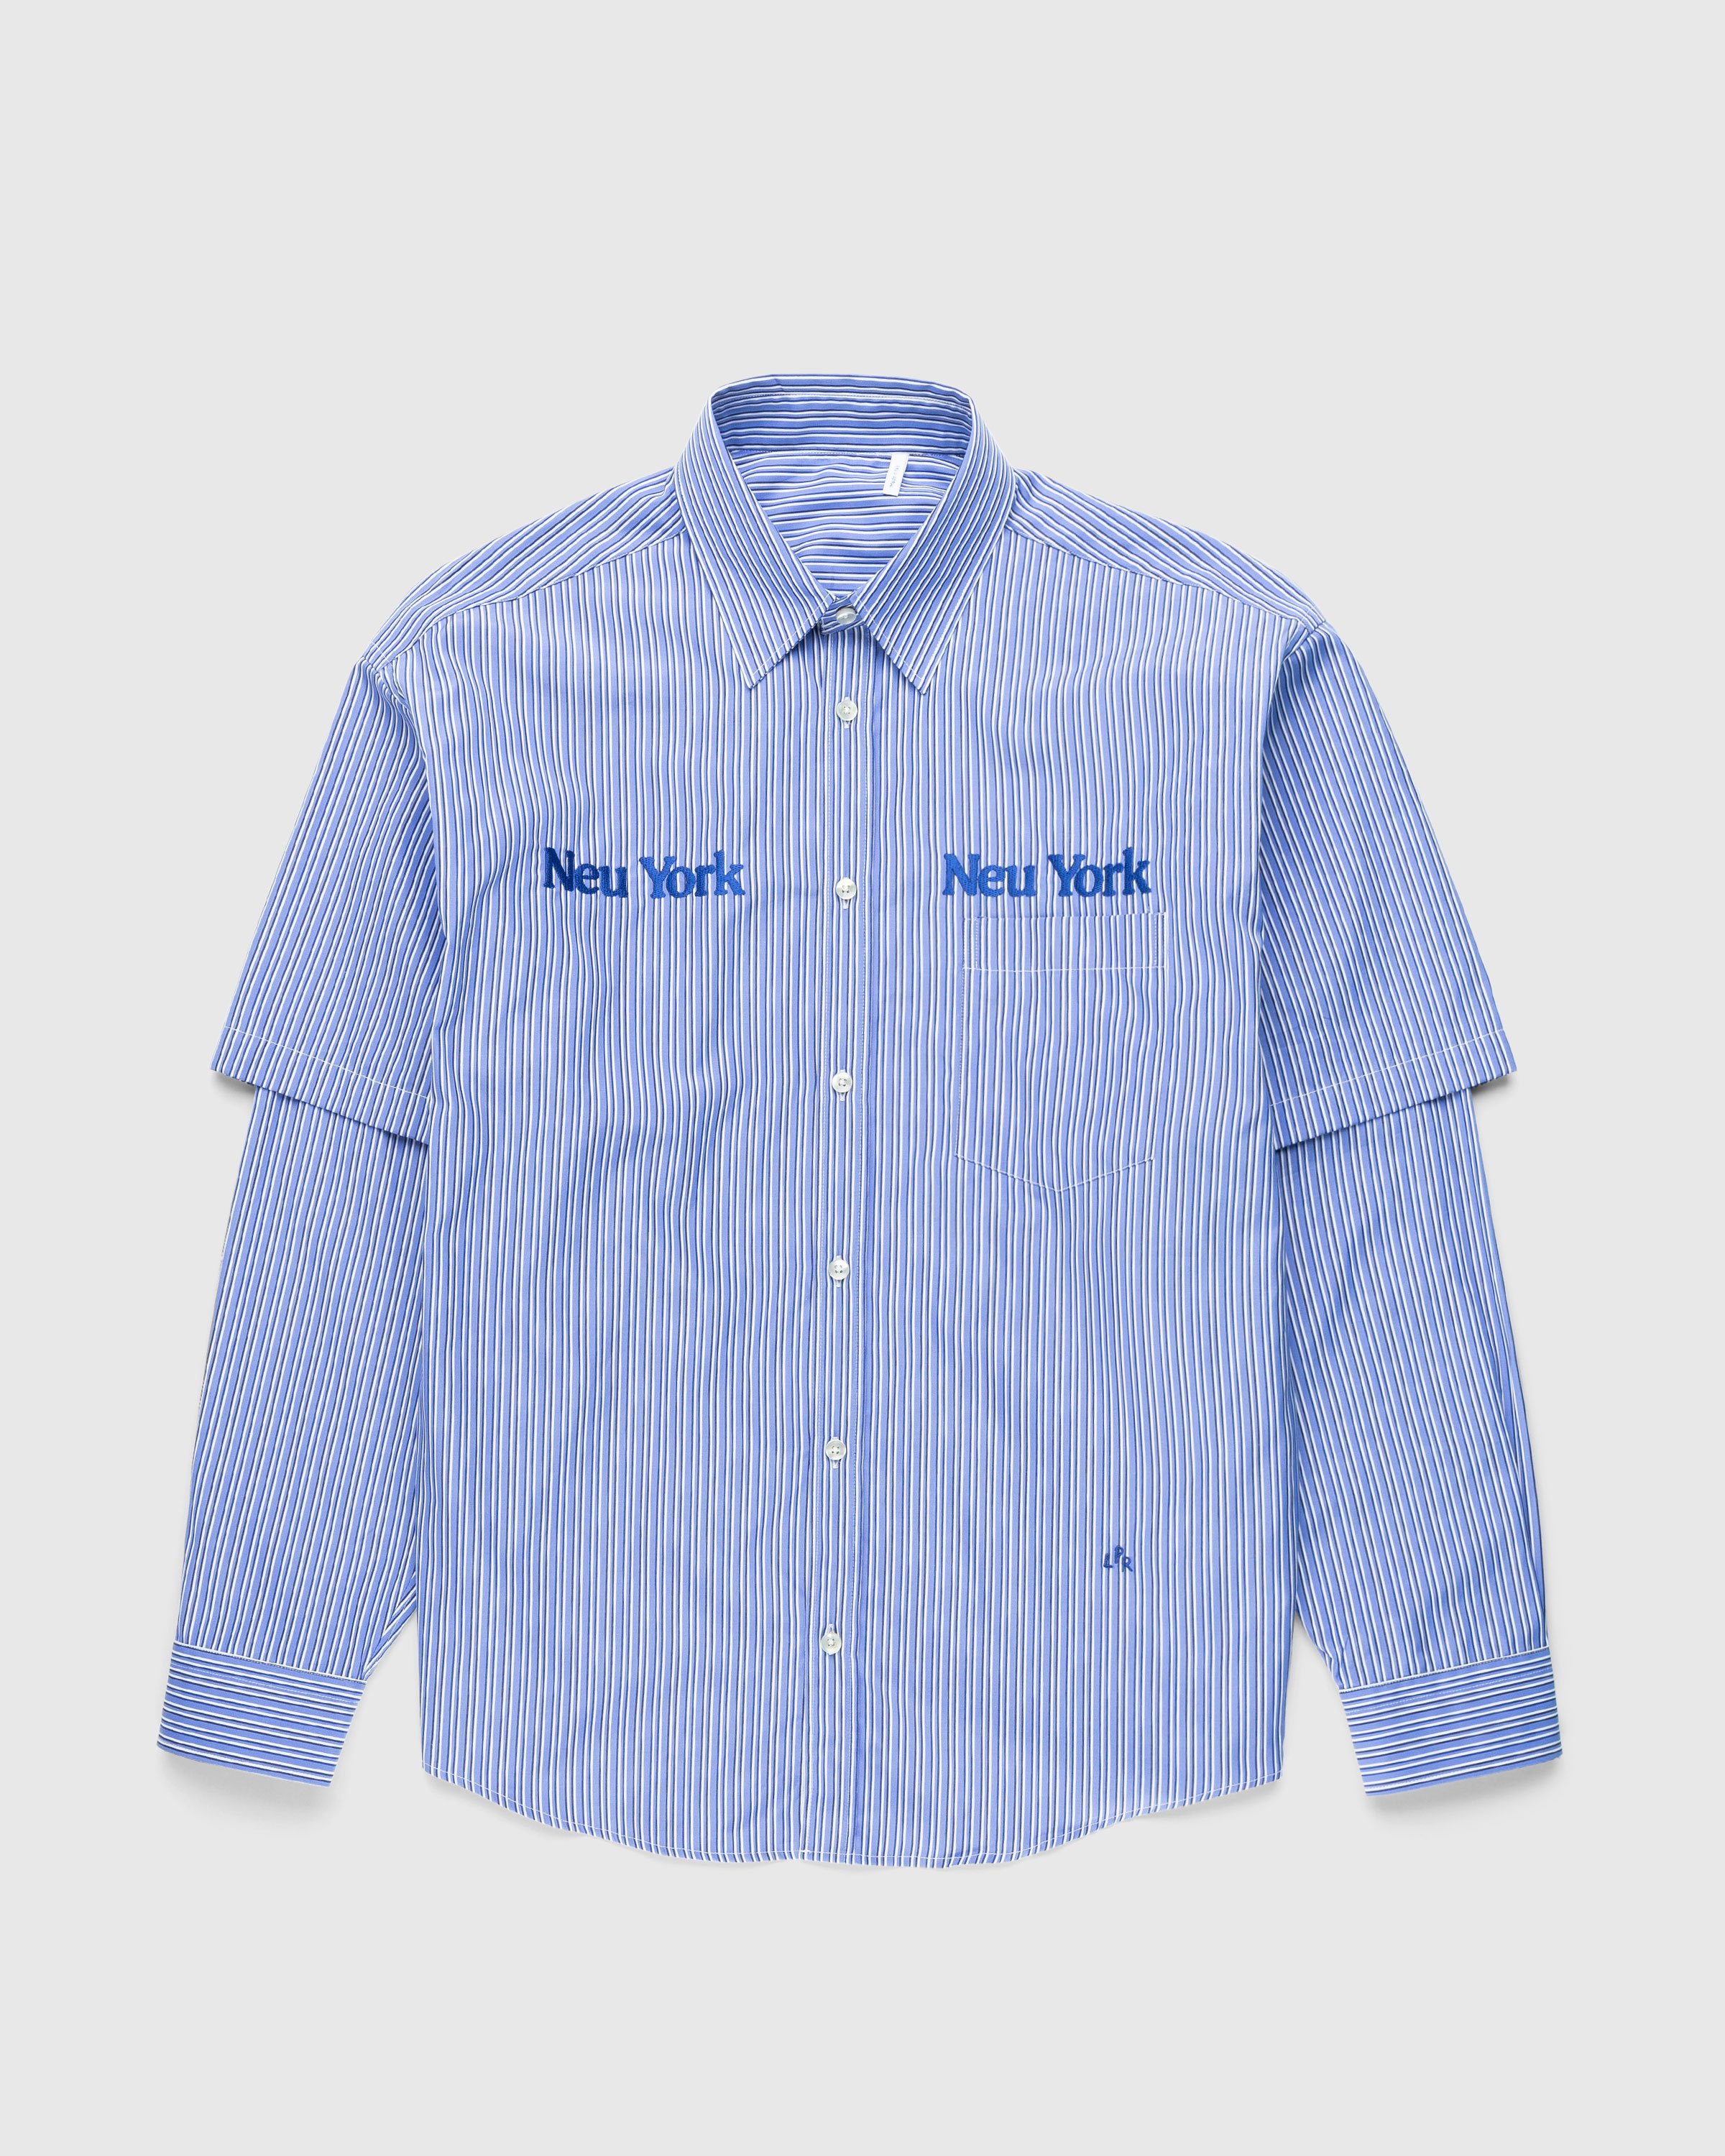 NWT NEW CELINE MESH BIB Button-Up Top Shirt 38 / 6 WHITE BLUE NAVY –  Psychotic Leopard